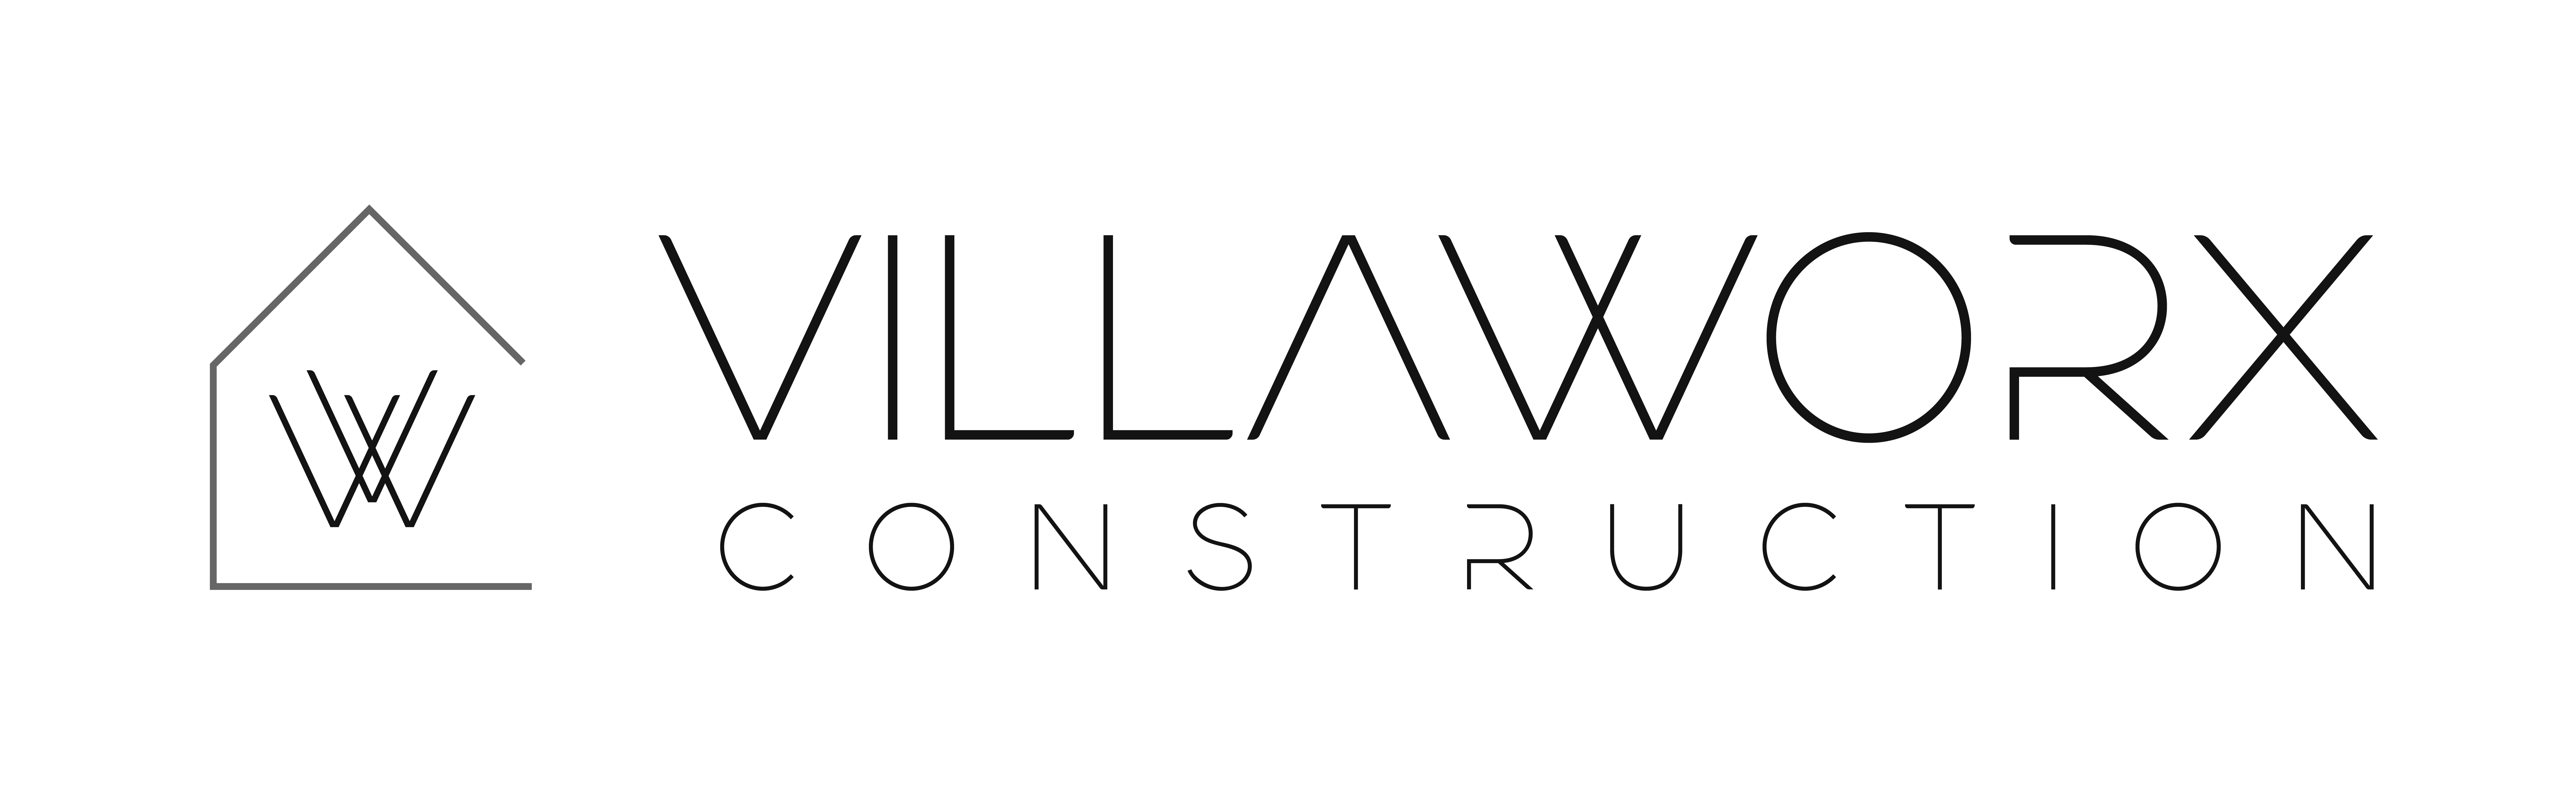 Villaworx Construction Secondary Logo Full Colour